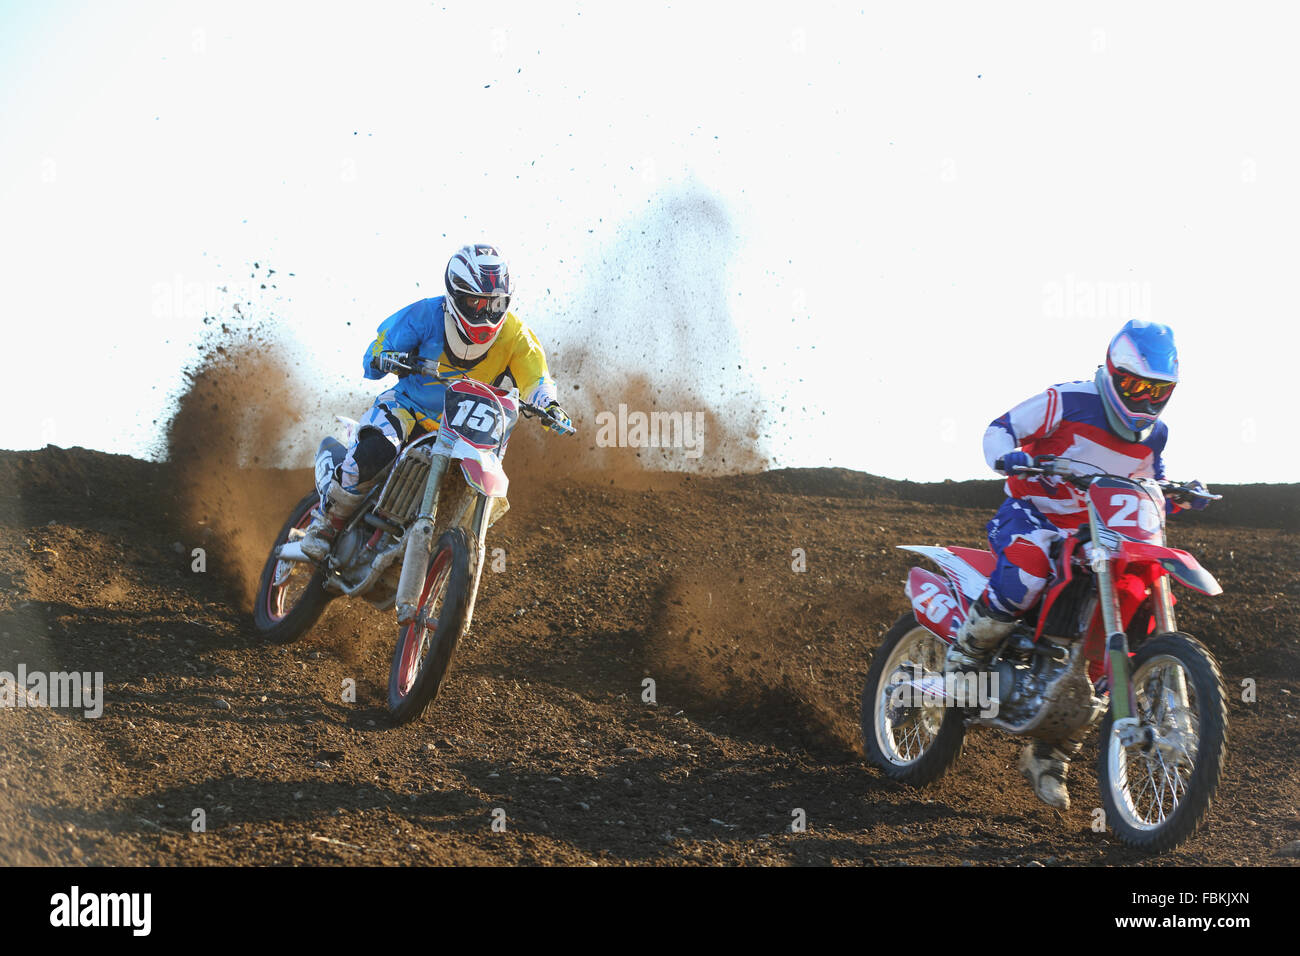 Motocross bikers on dirt track Stock Photo